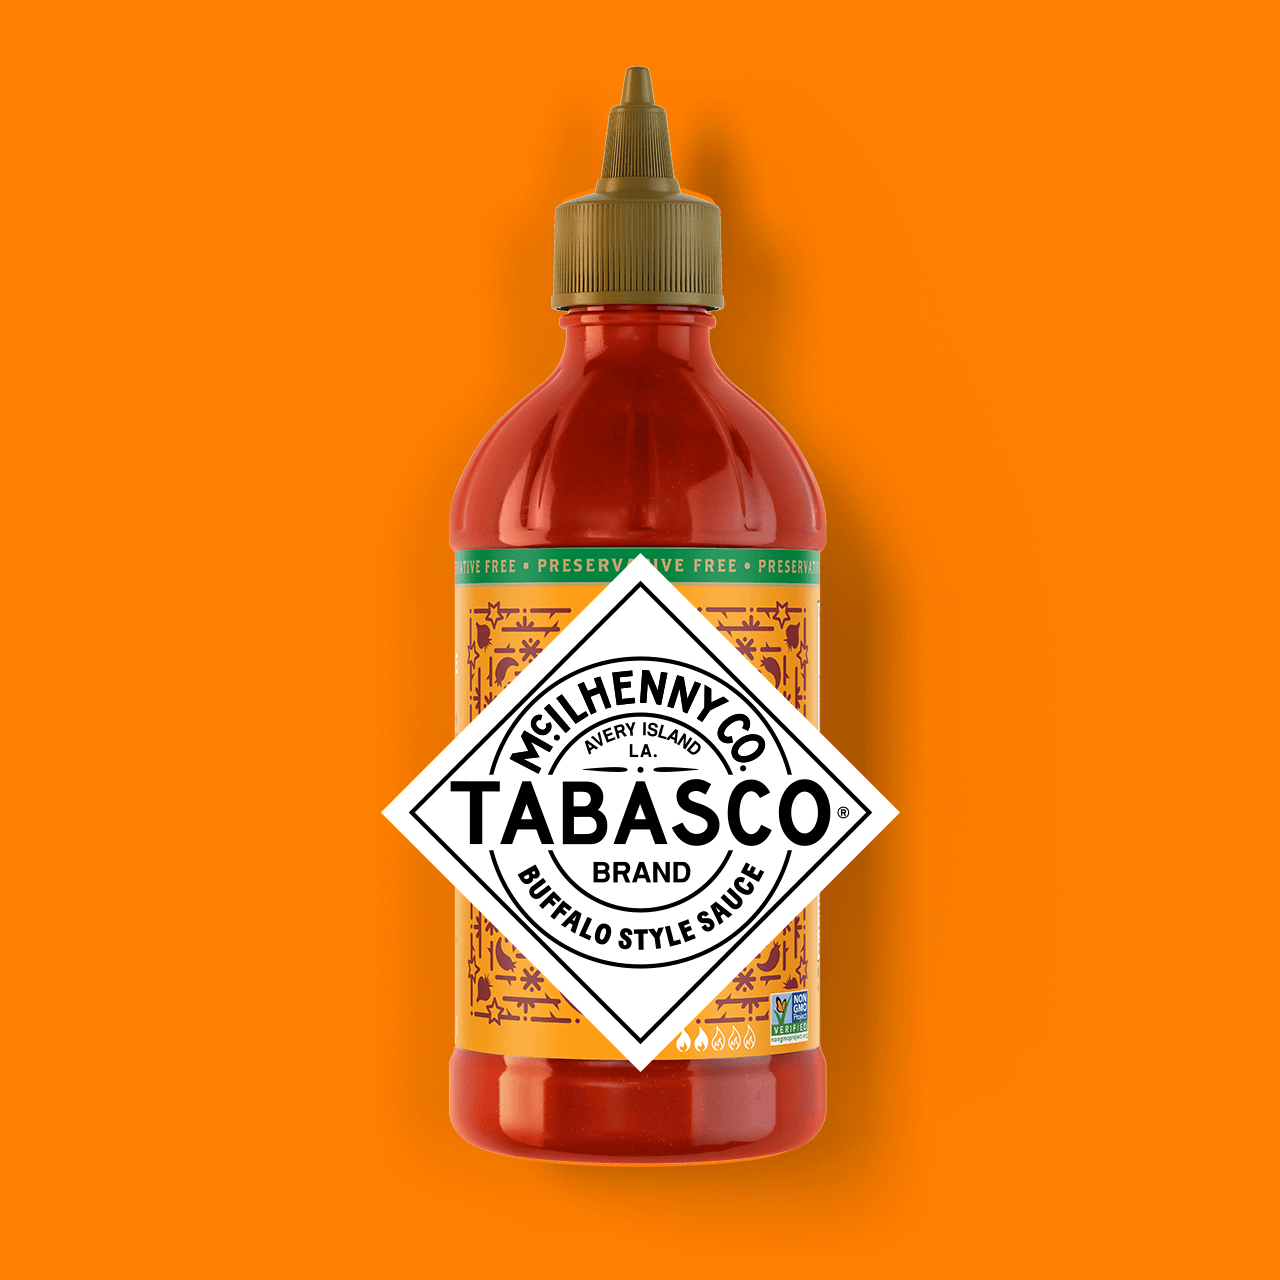 TABASCO® Buffalo Style Sauce